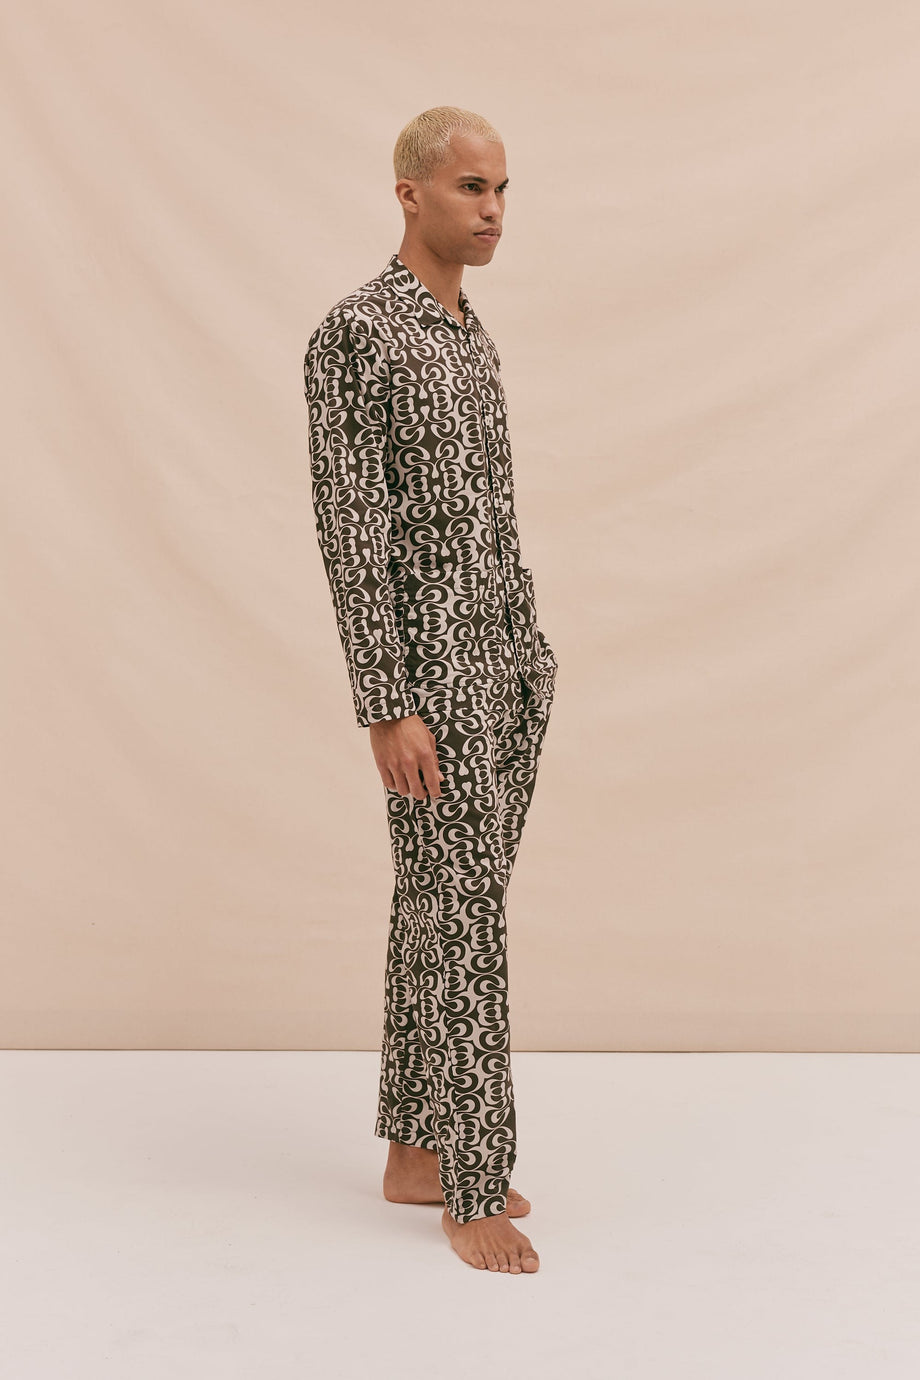 Men’s Pocket Pyjama Set Marque Print Cocoa/Sand